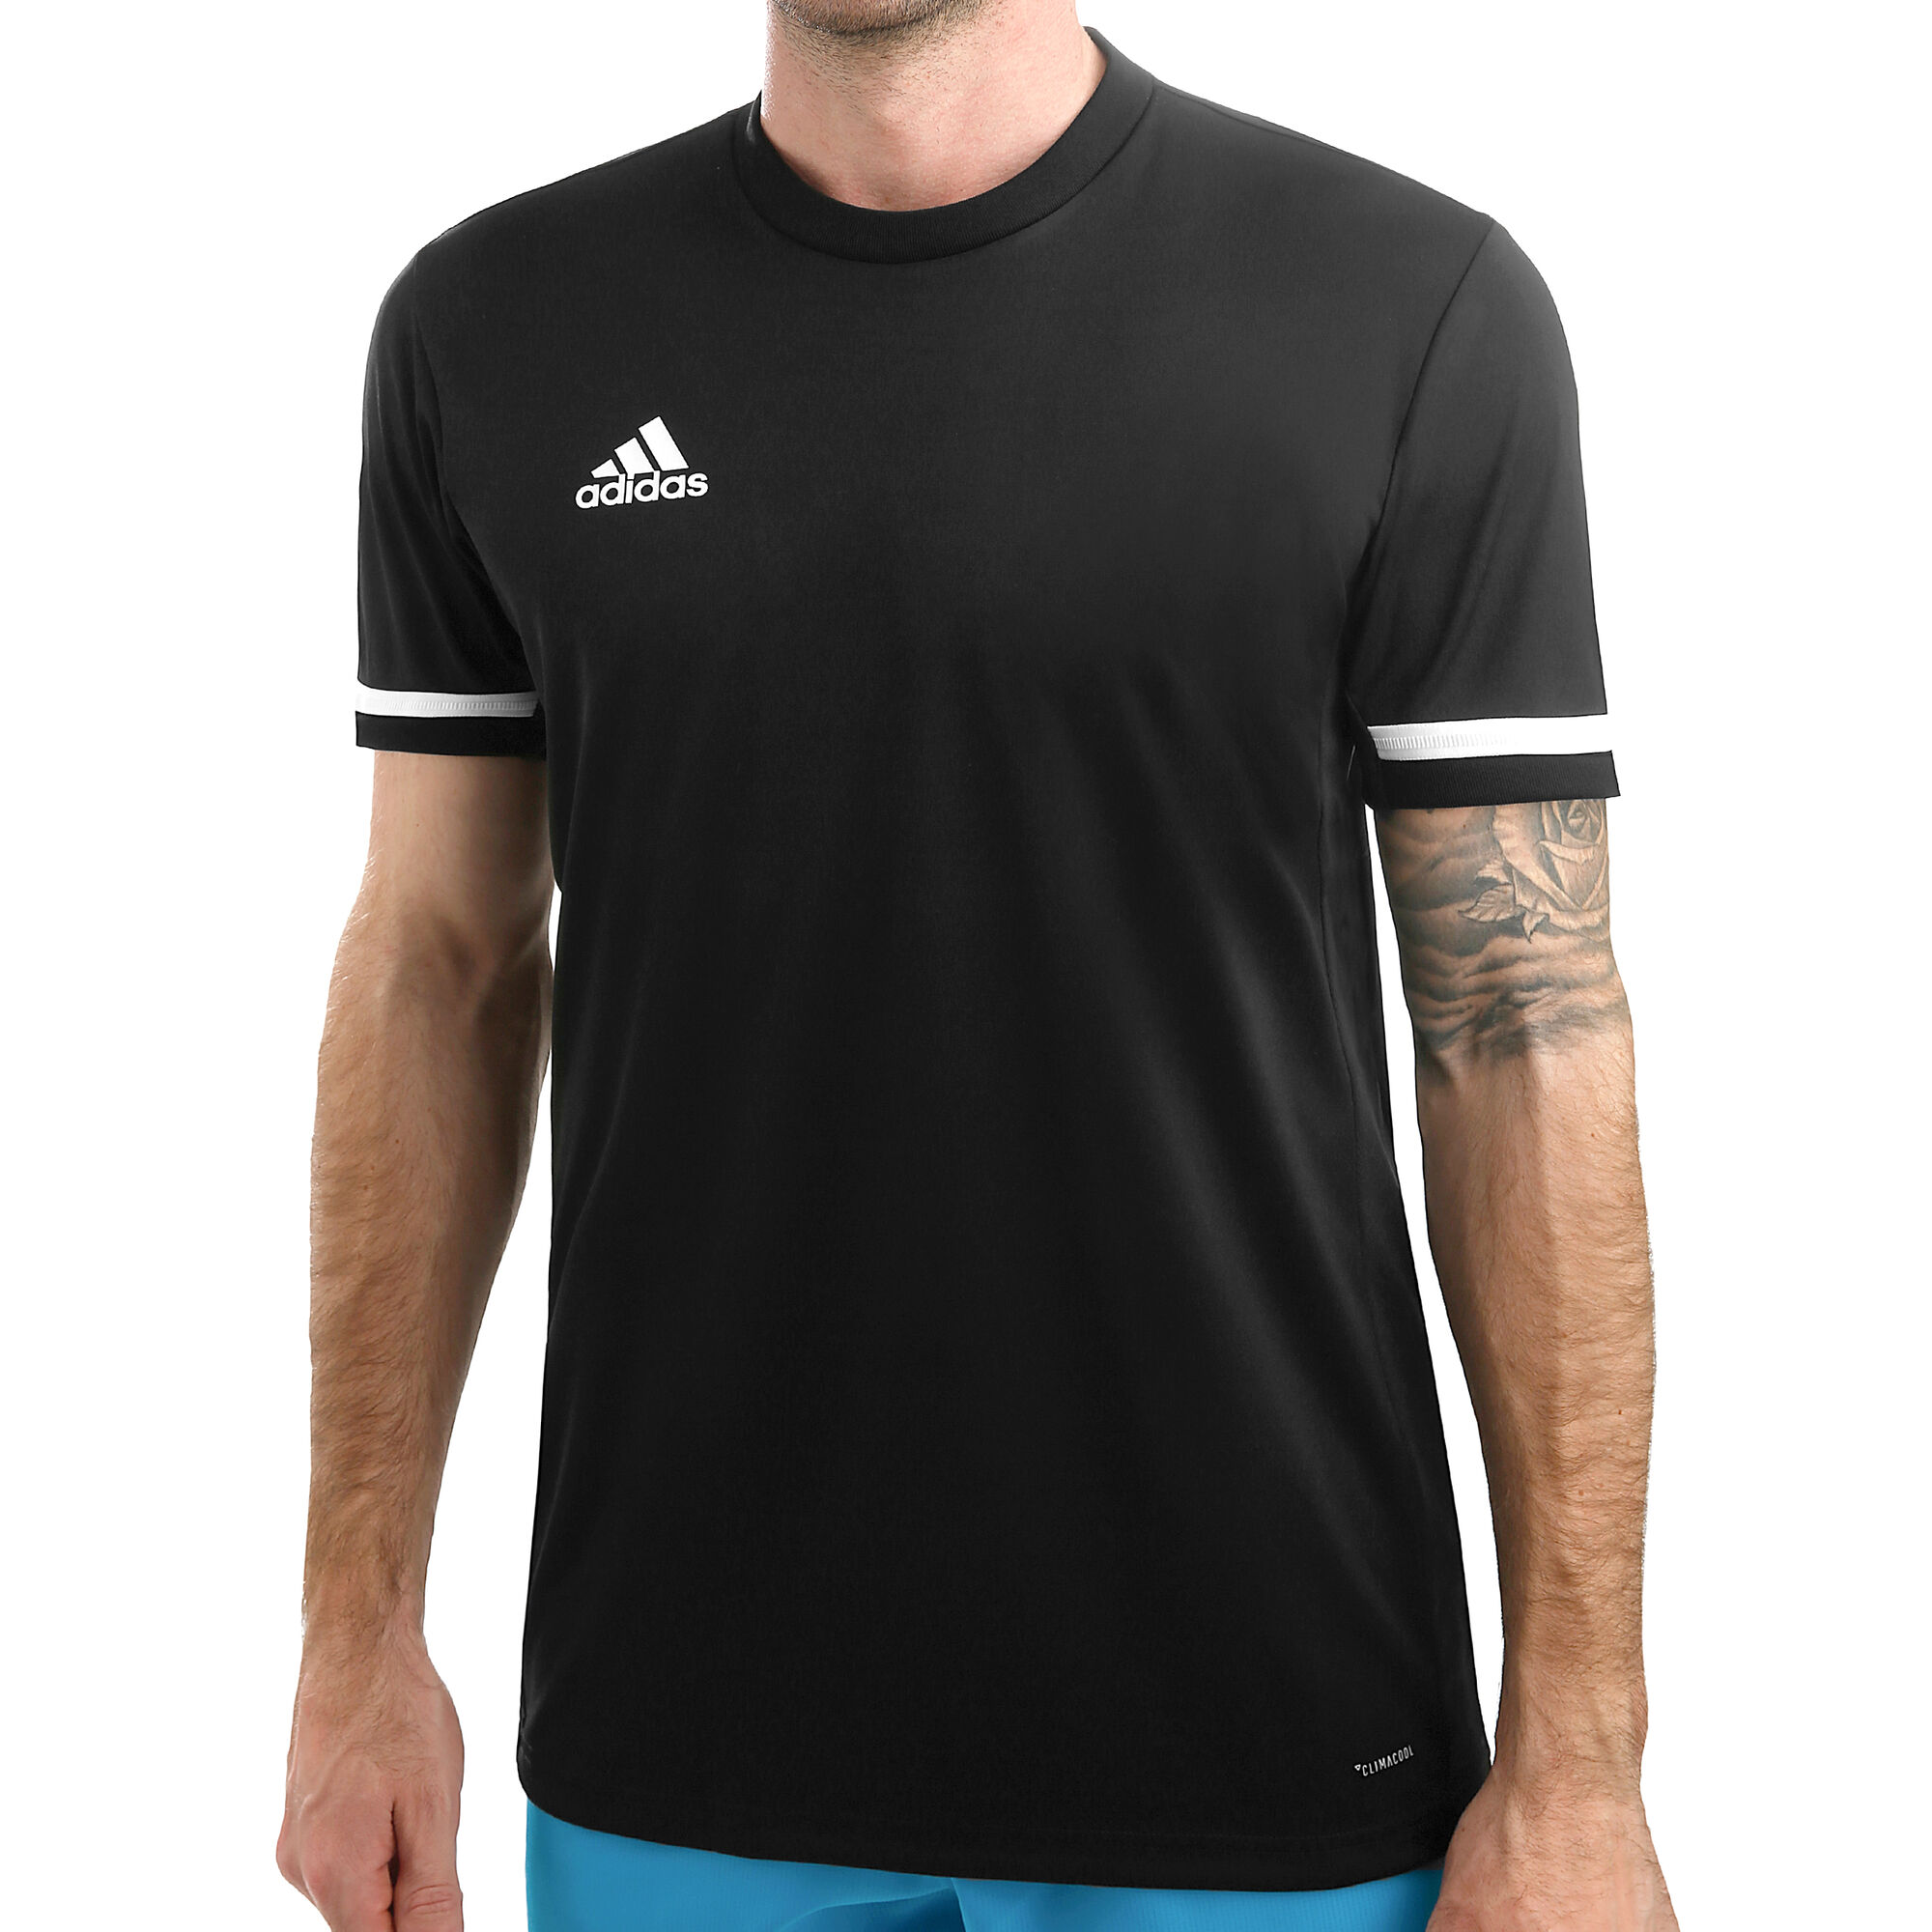 Portier Voorspeller Polijsten buy adidas T19 T-Shirt Men - Black, White online | Tennis-Point